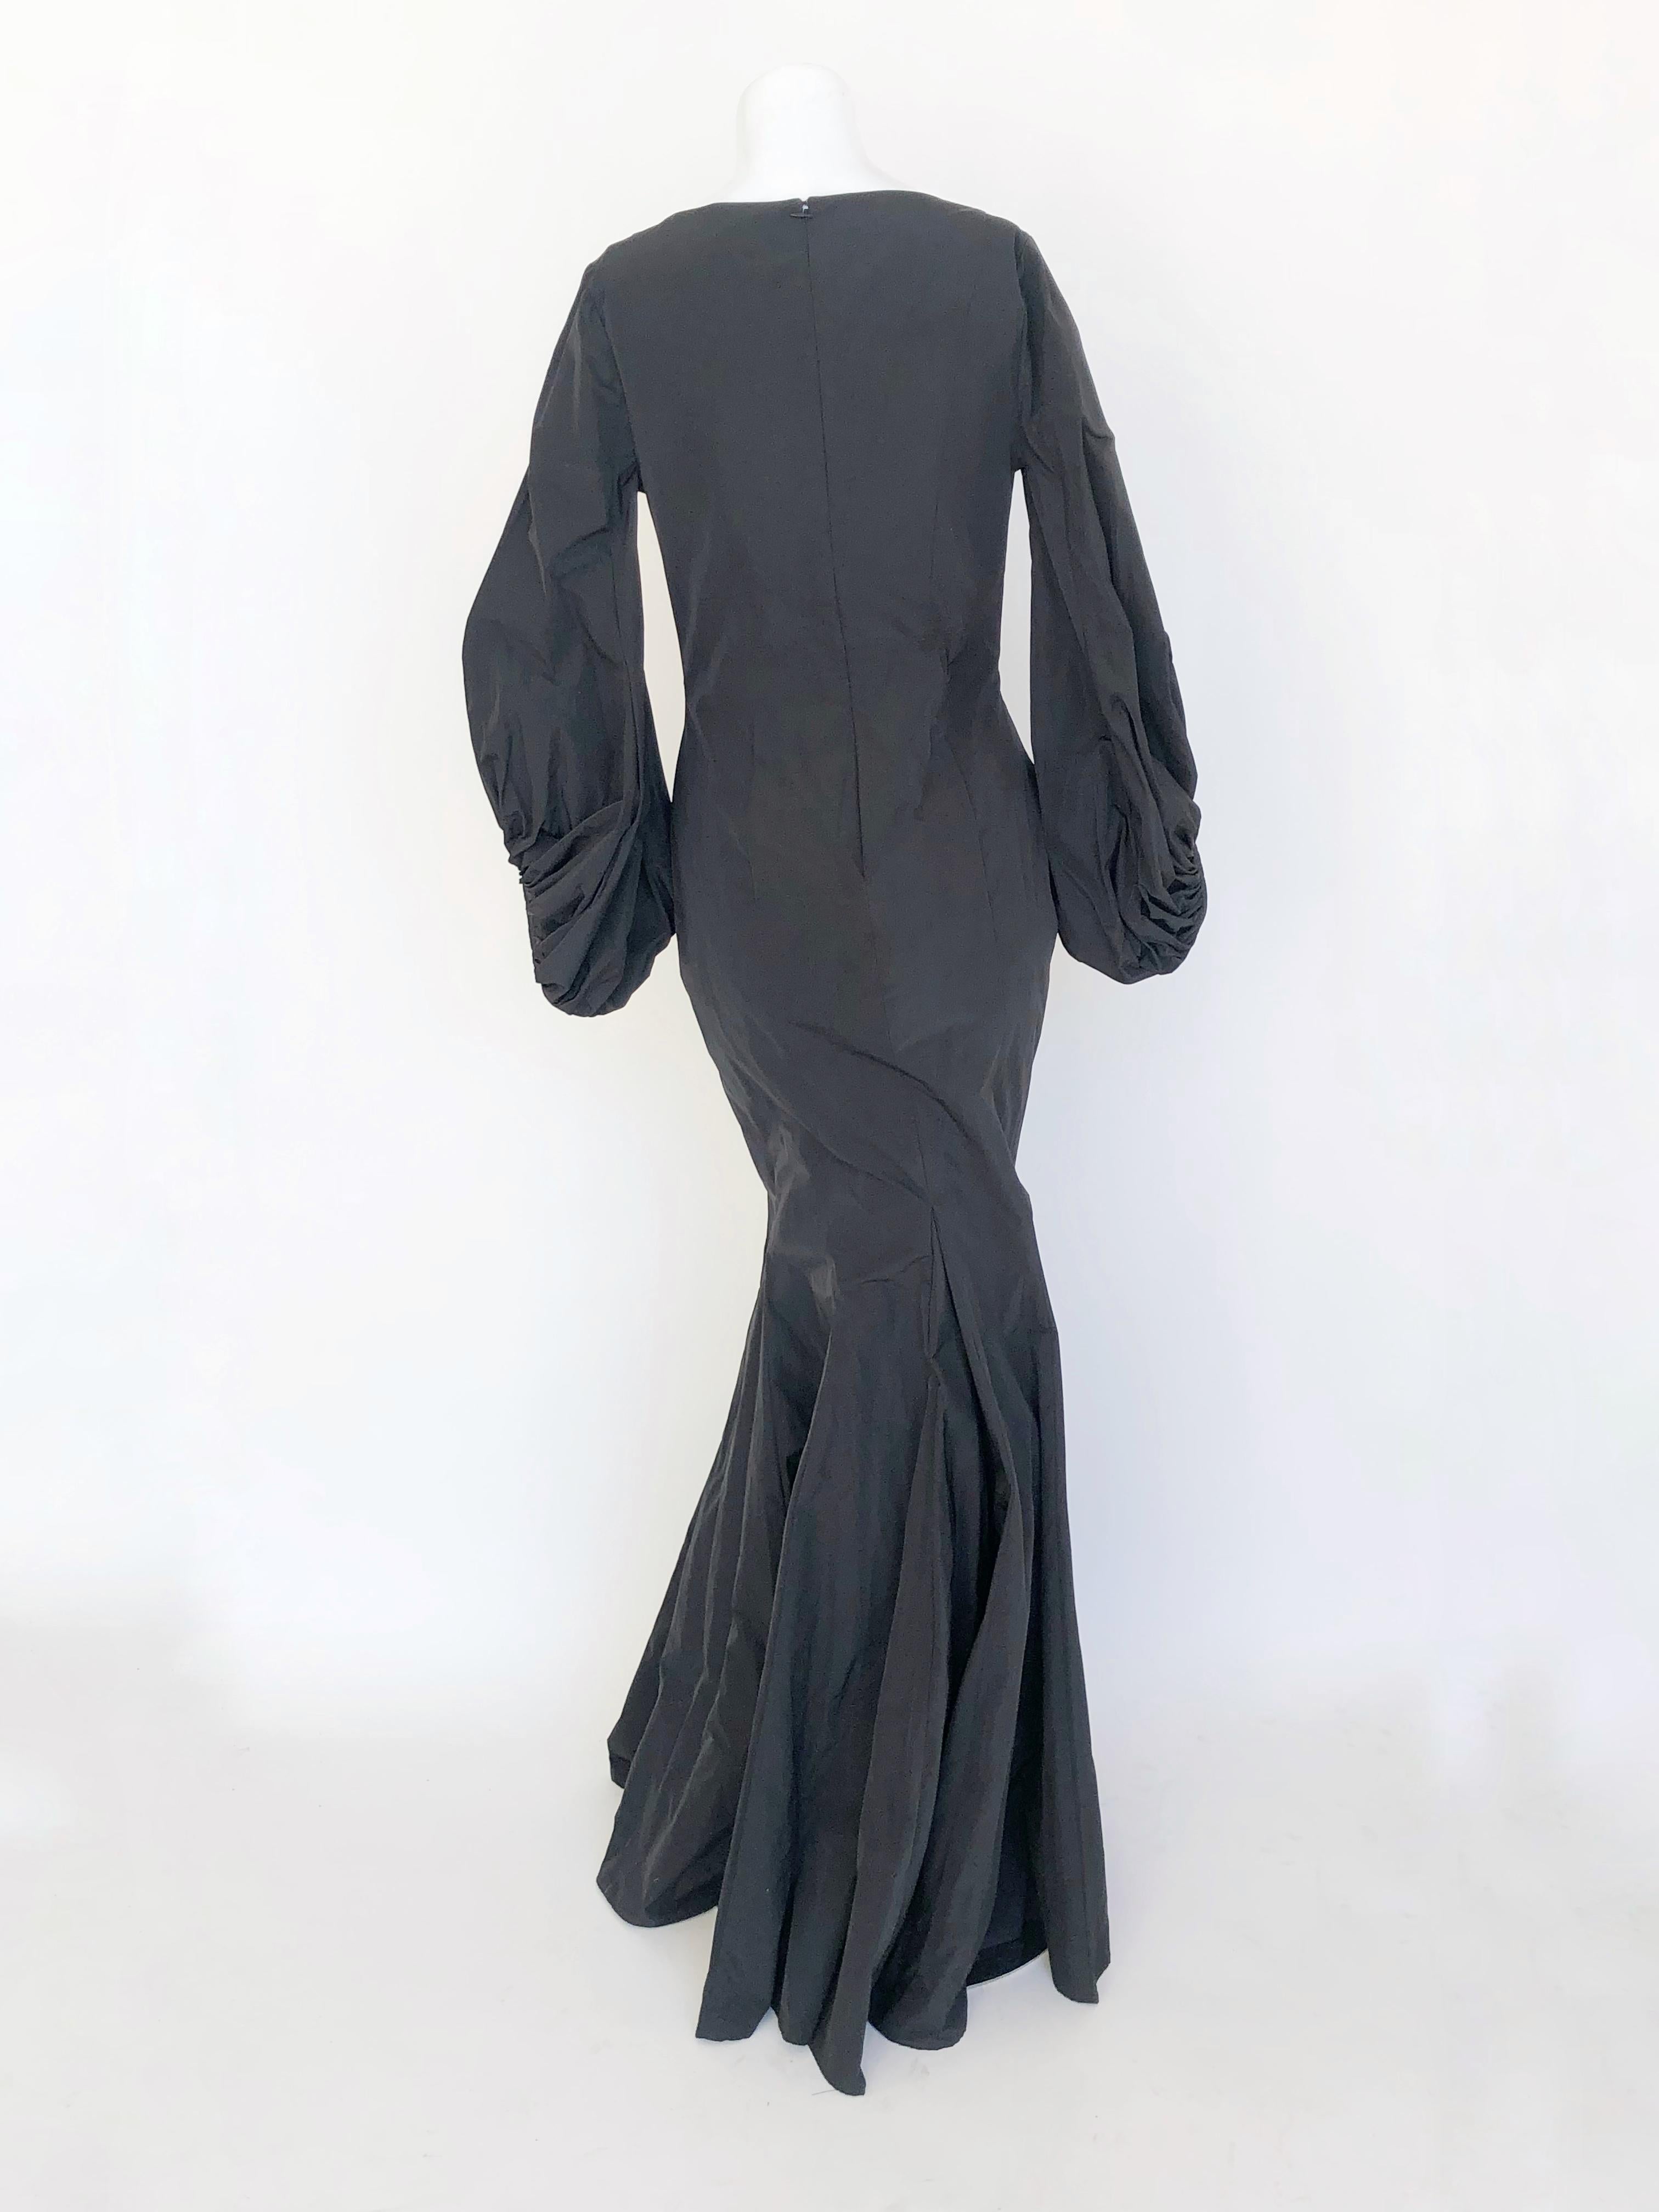 zac posen black gown